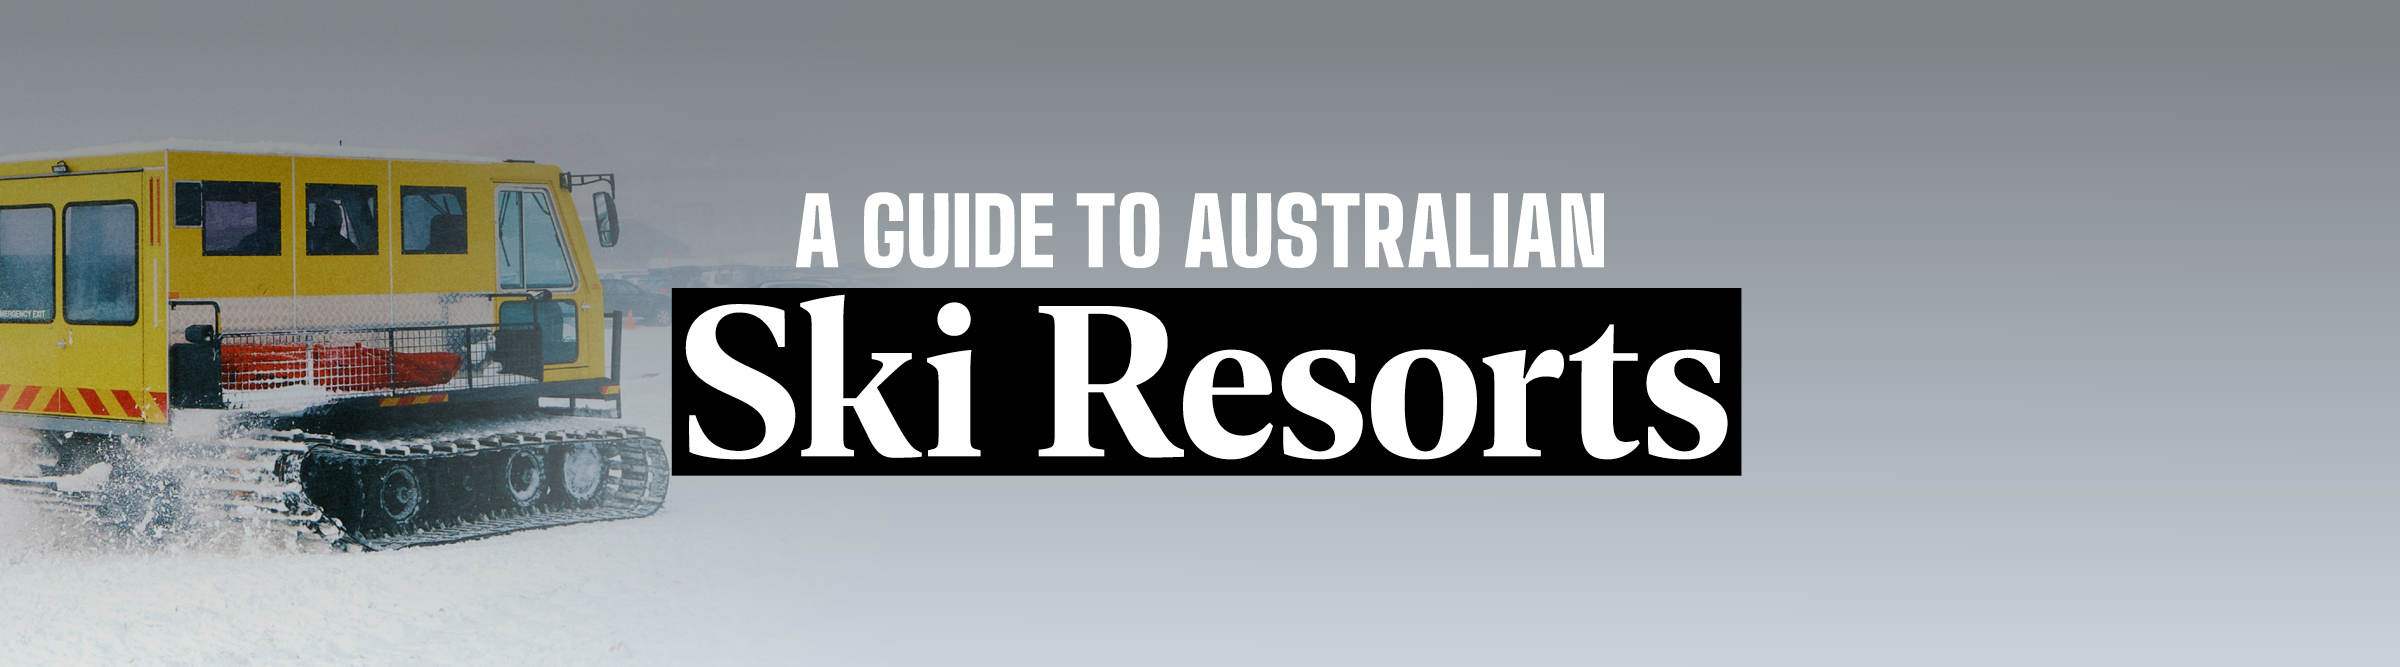 A Guide To Australian Ski Resorts